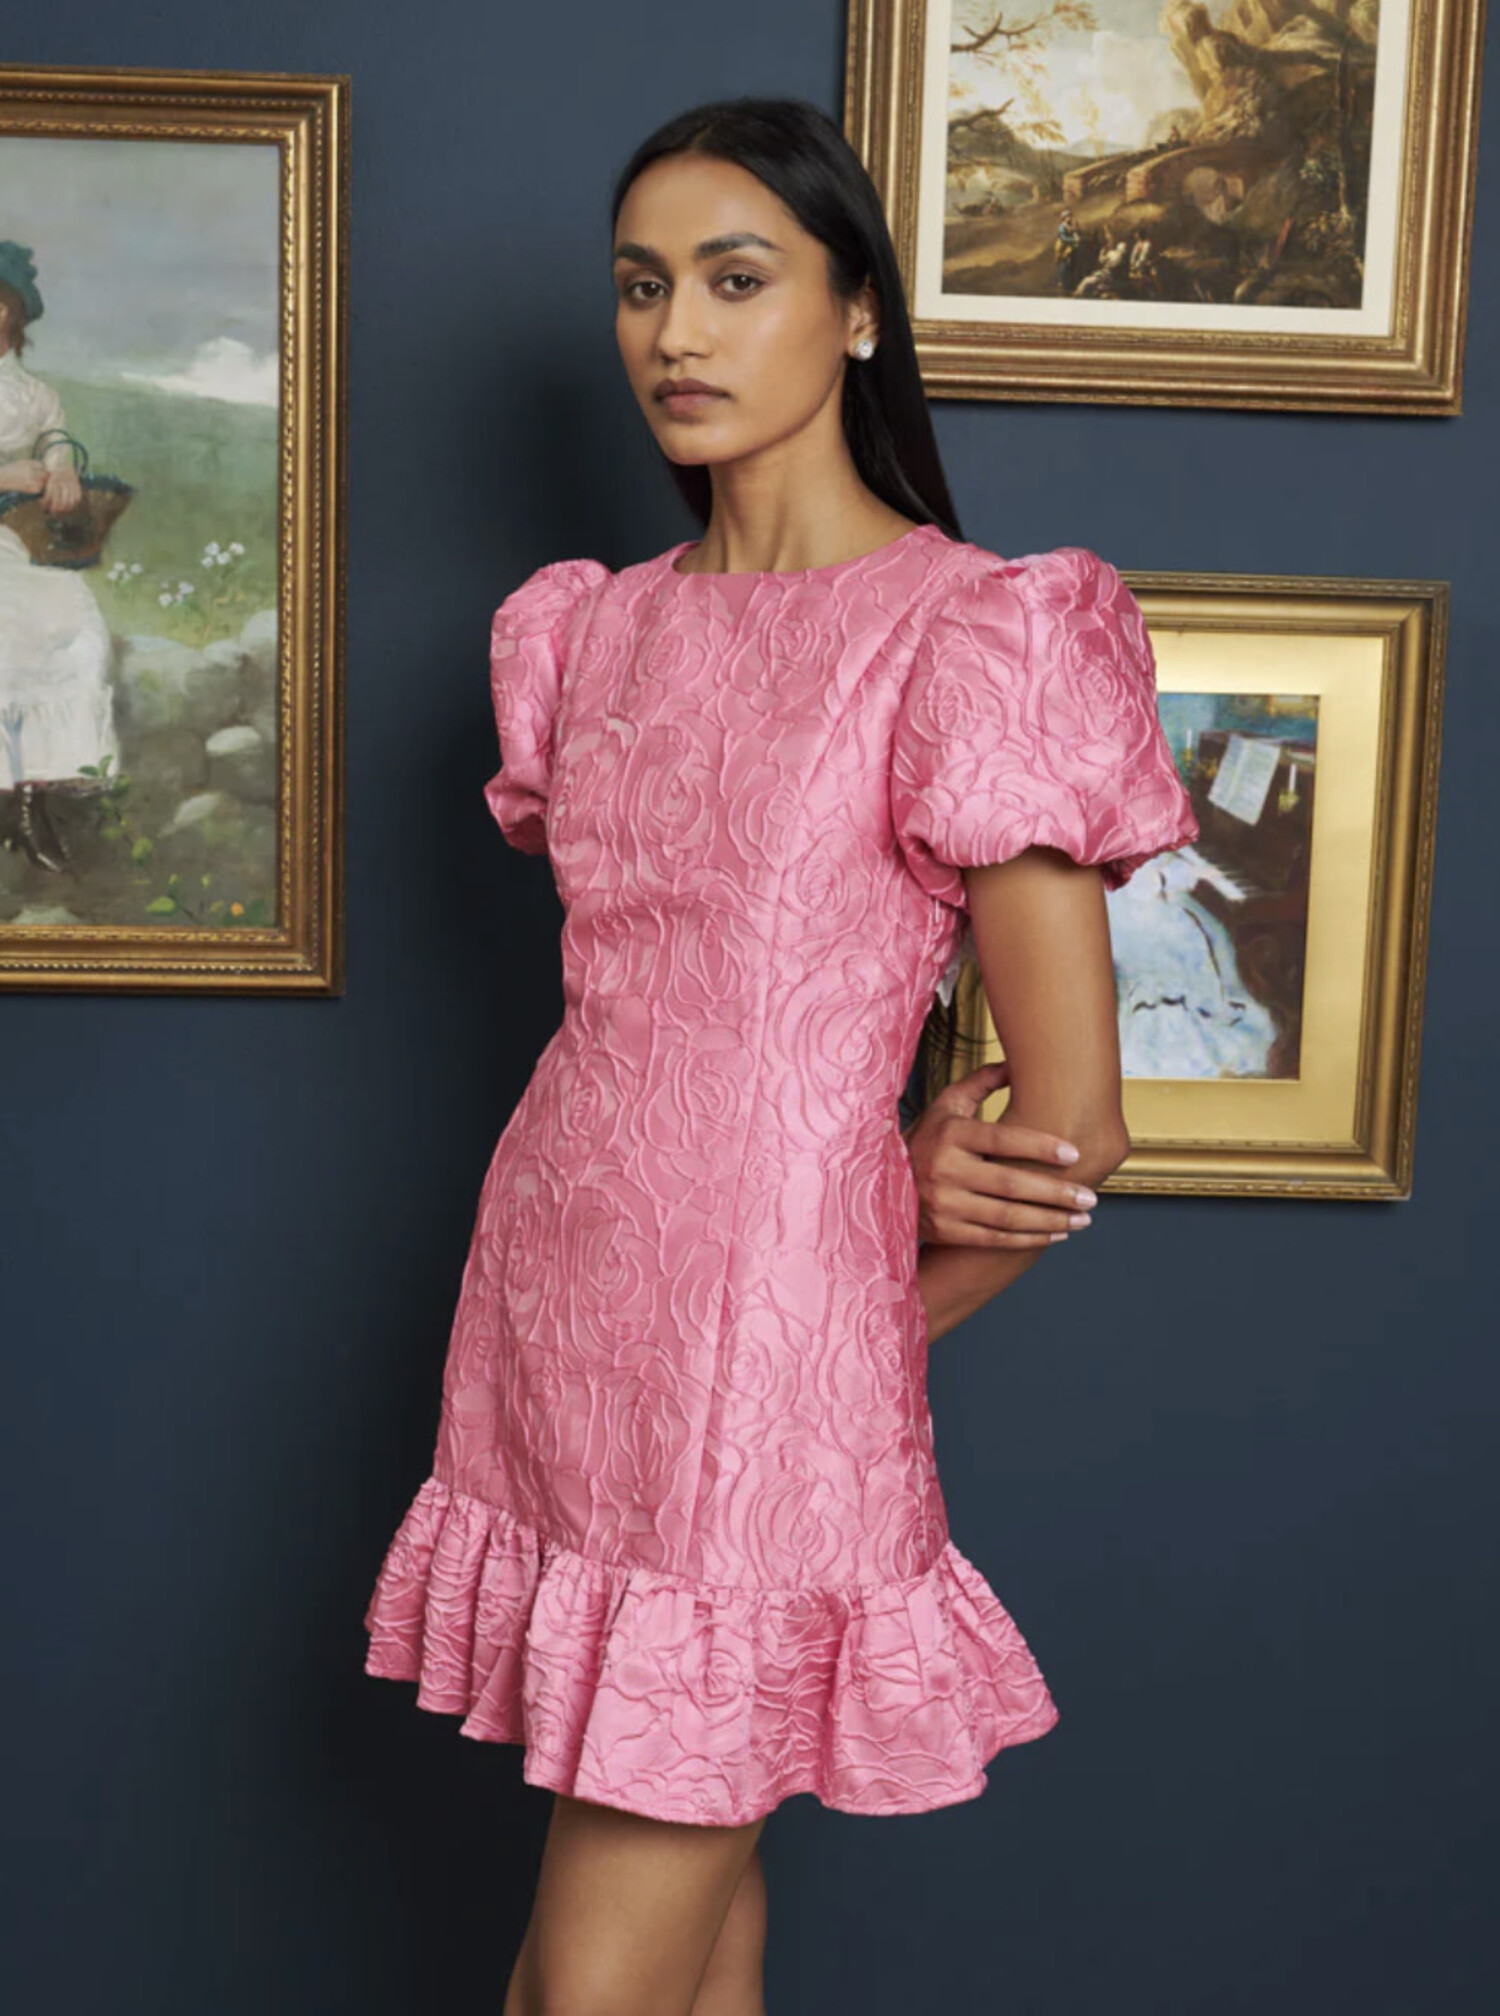 pink jacquard dress